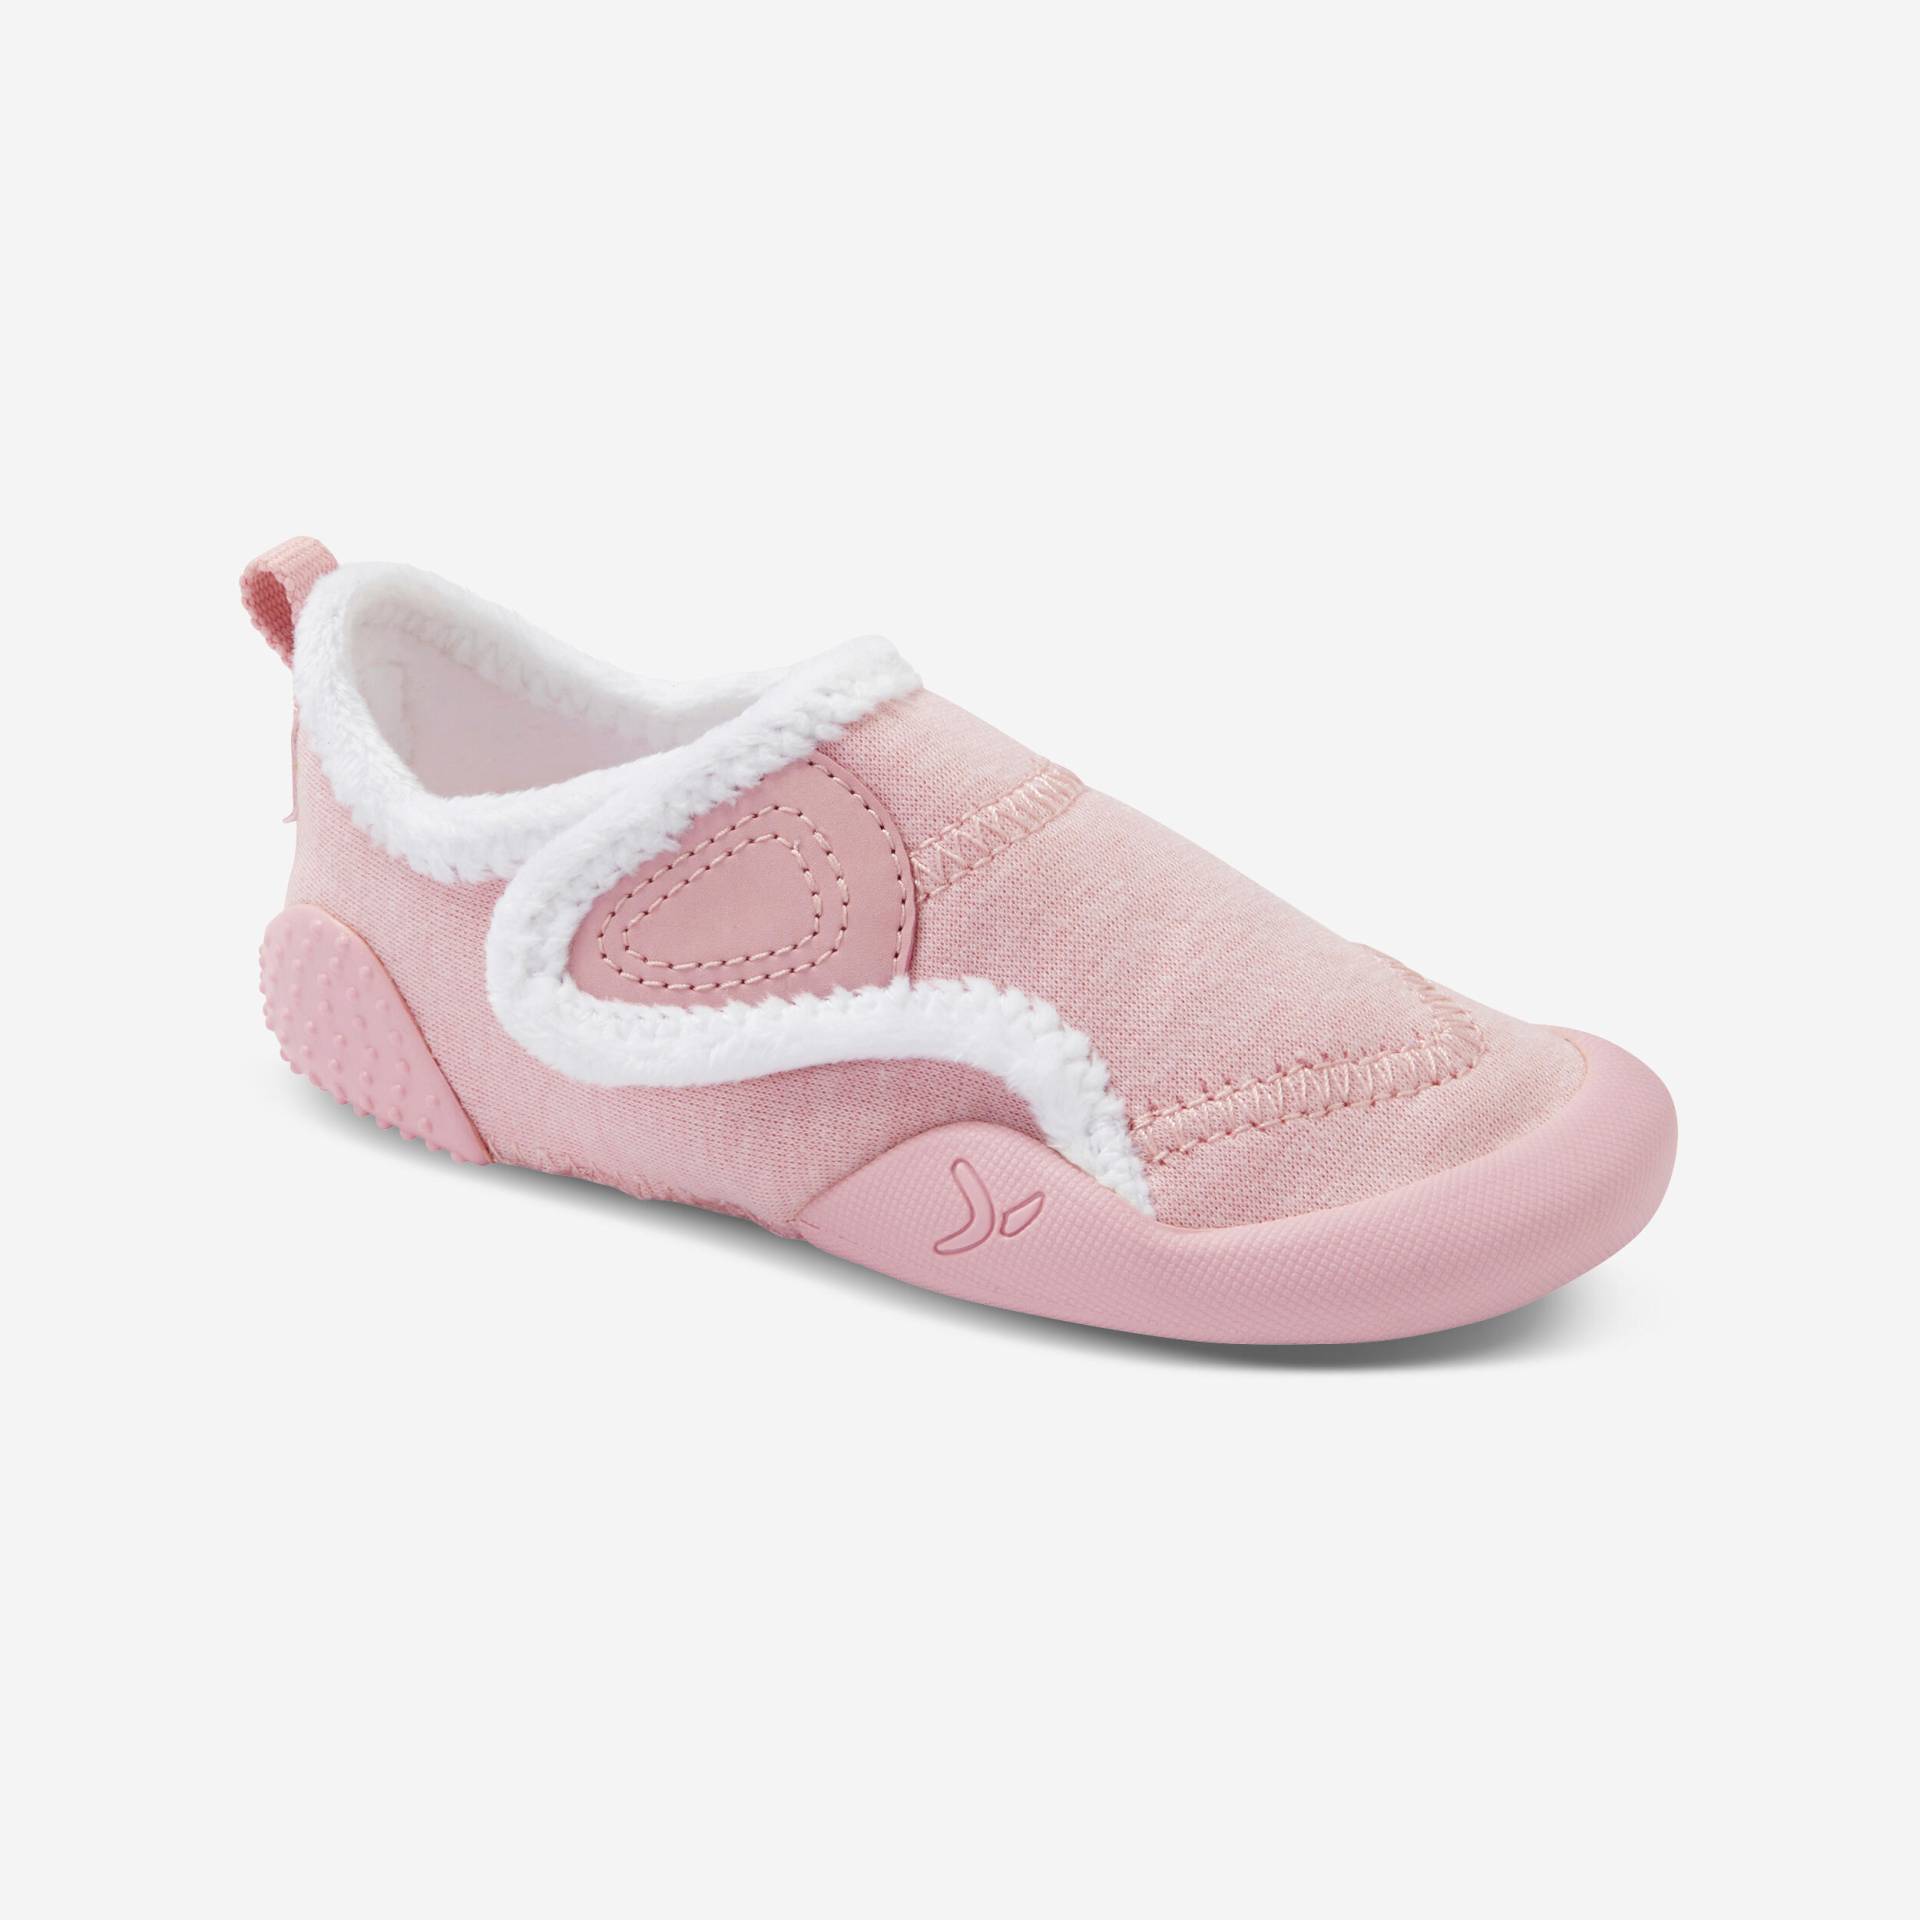 Turnschuhe/Hausschuhe Babylight 550 Comfort Babyturnen rosa von Domyos